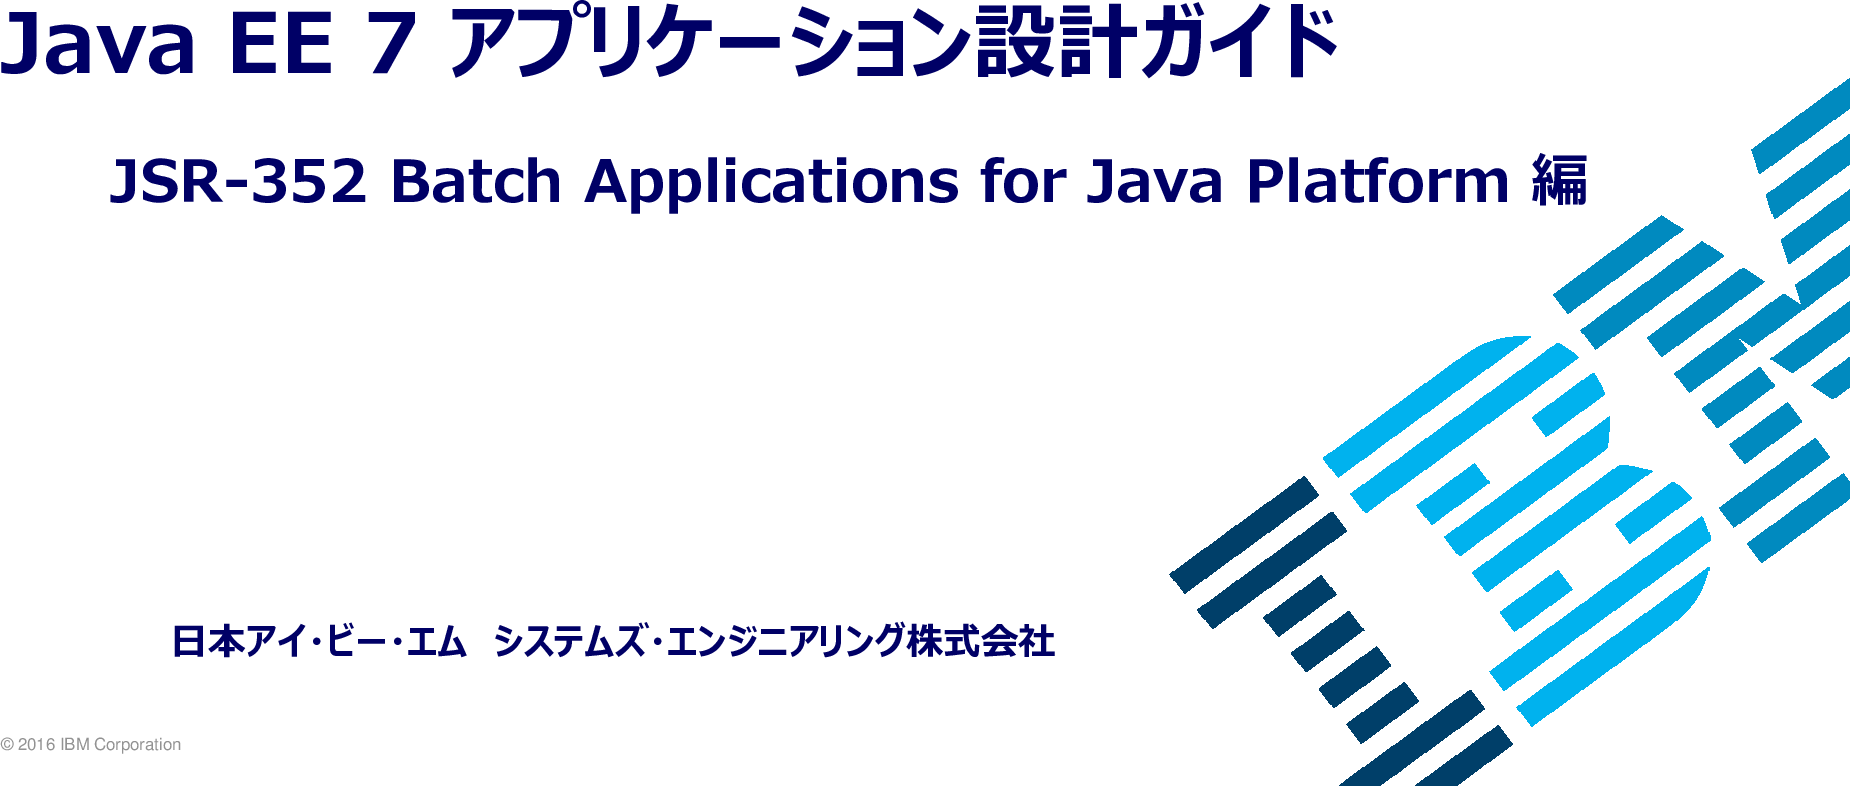 Ibm Brand Java Ee7app Guide Batch